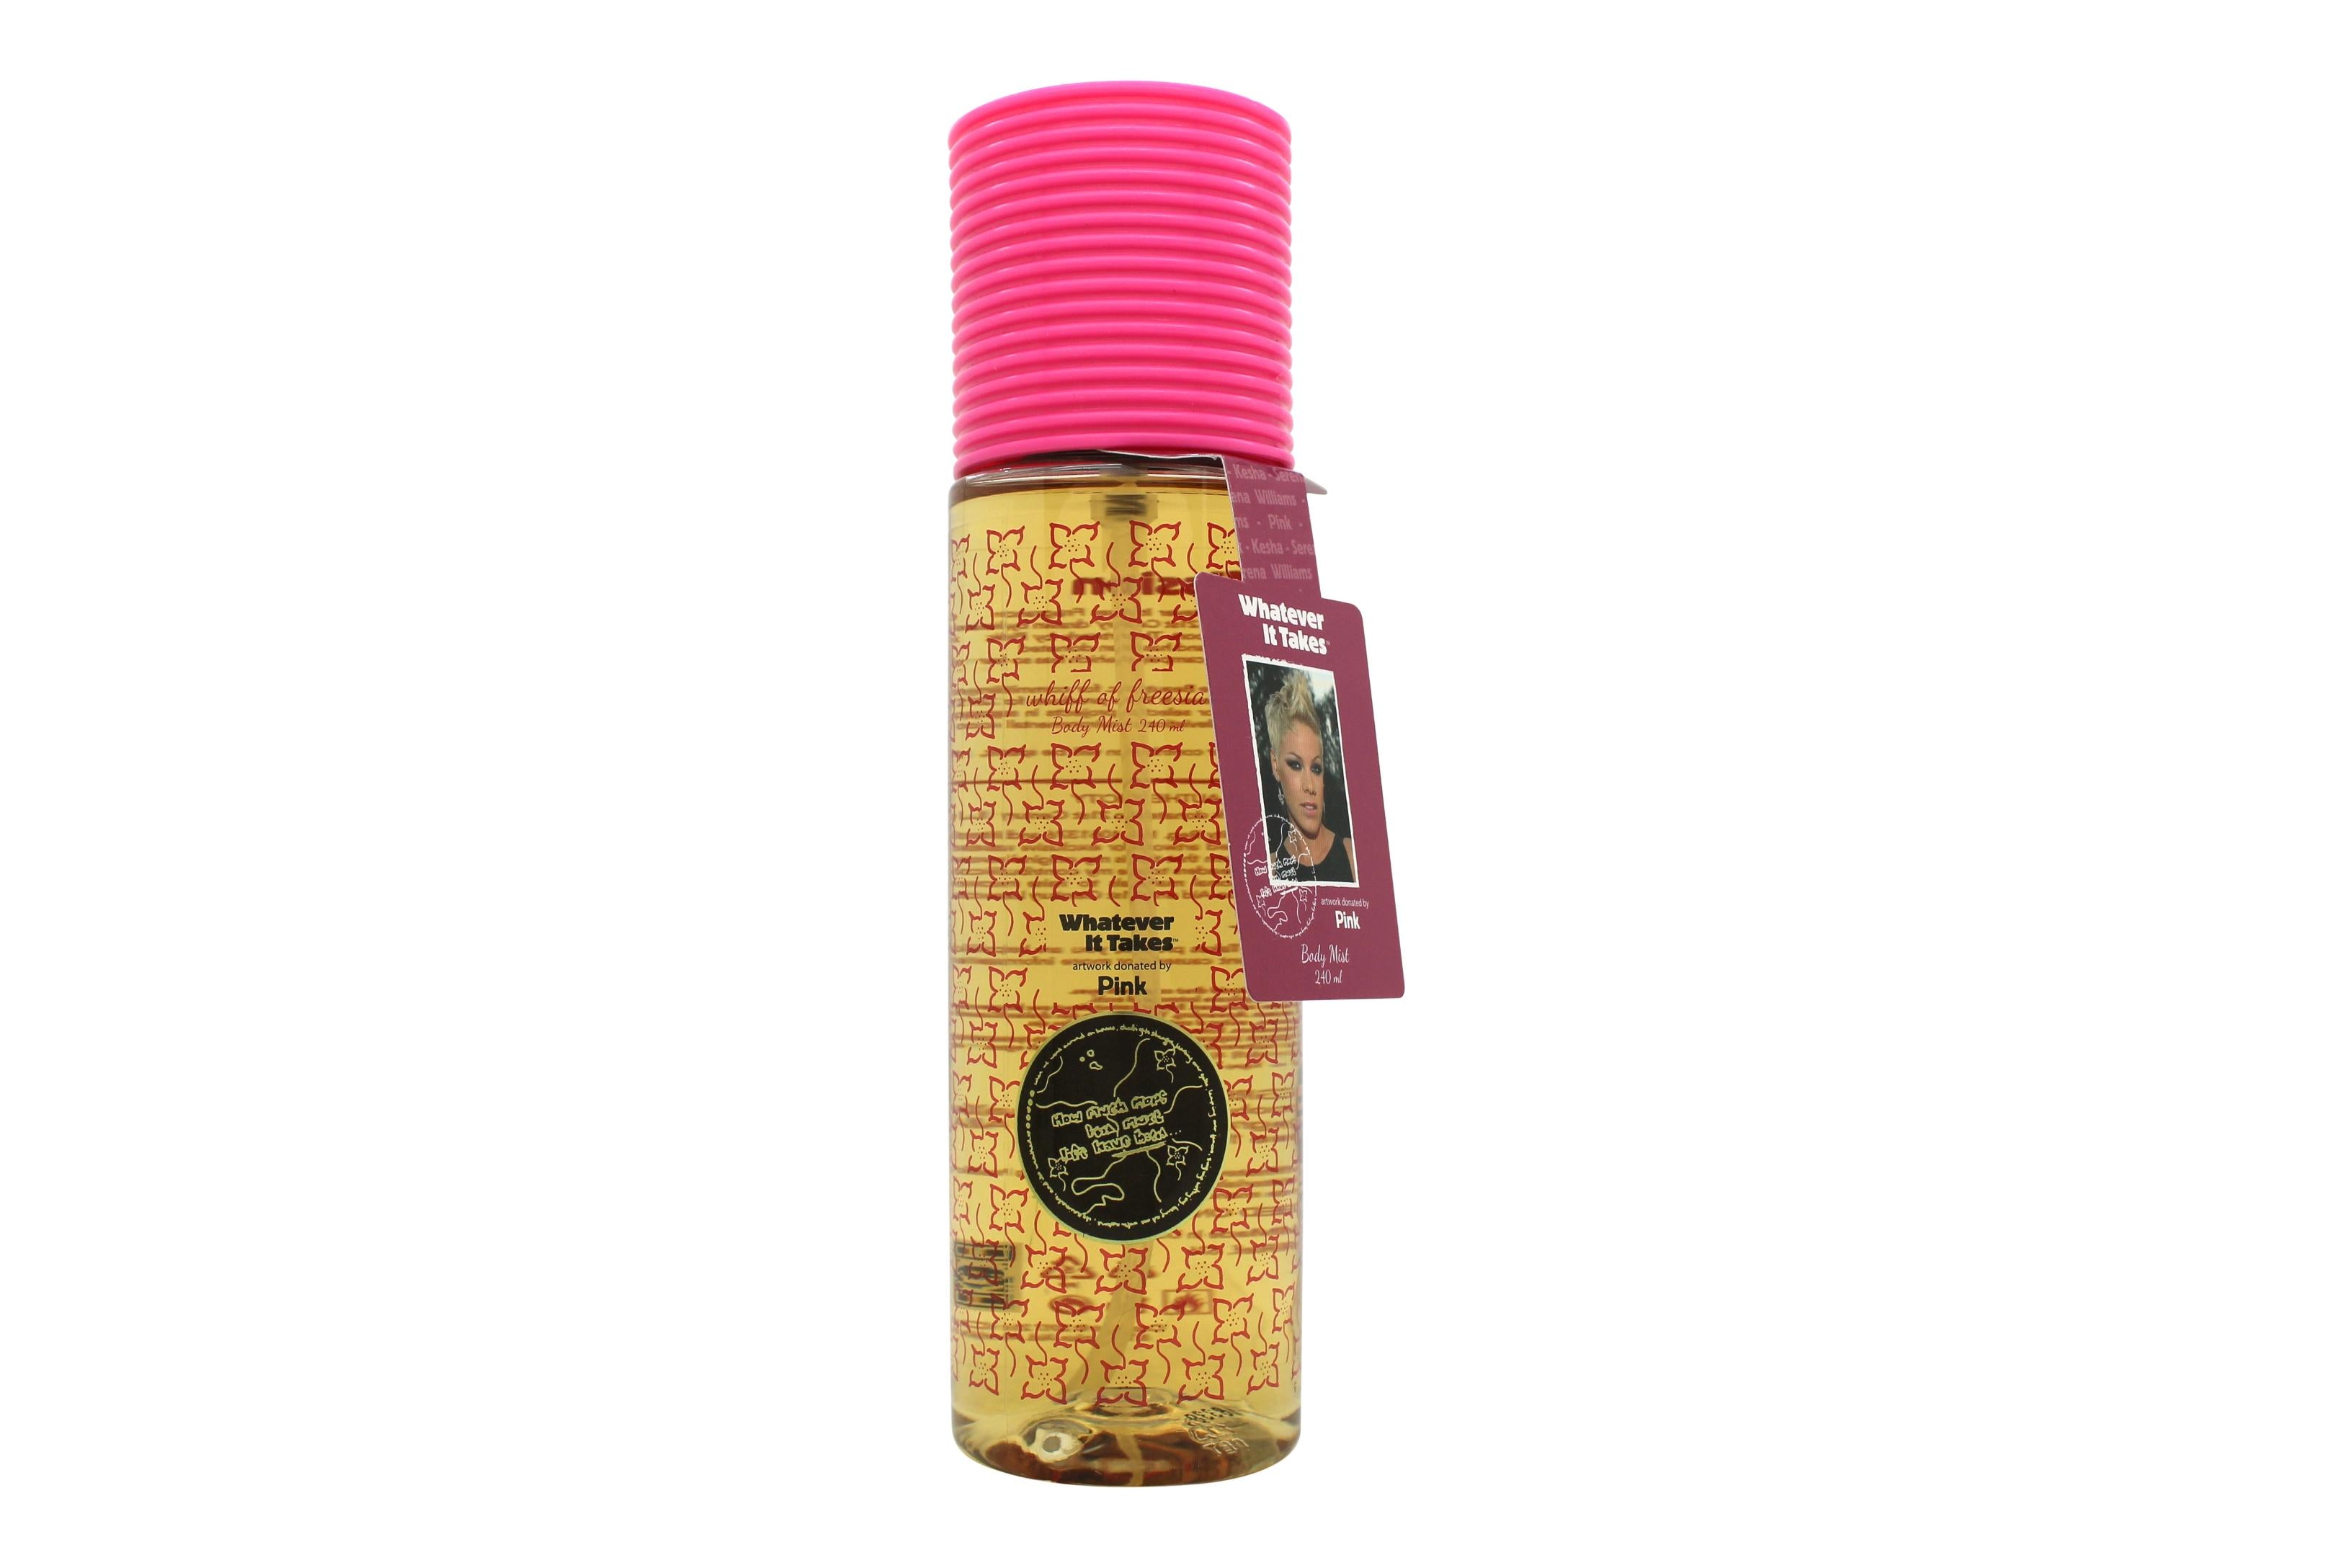 View Whatever It Takes Pink Whiff Of Freesia Body Mist 240ml Spray information